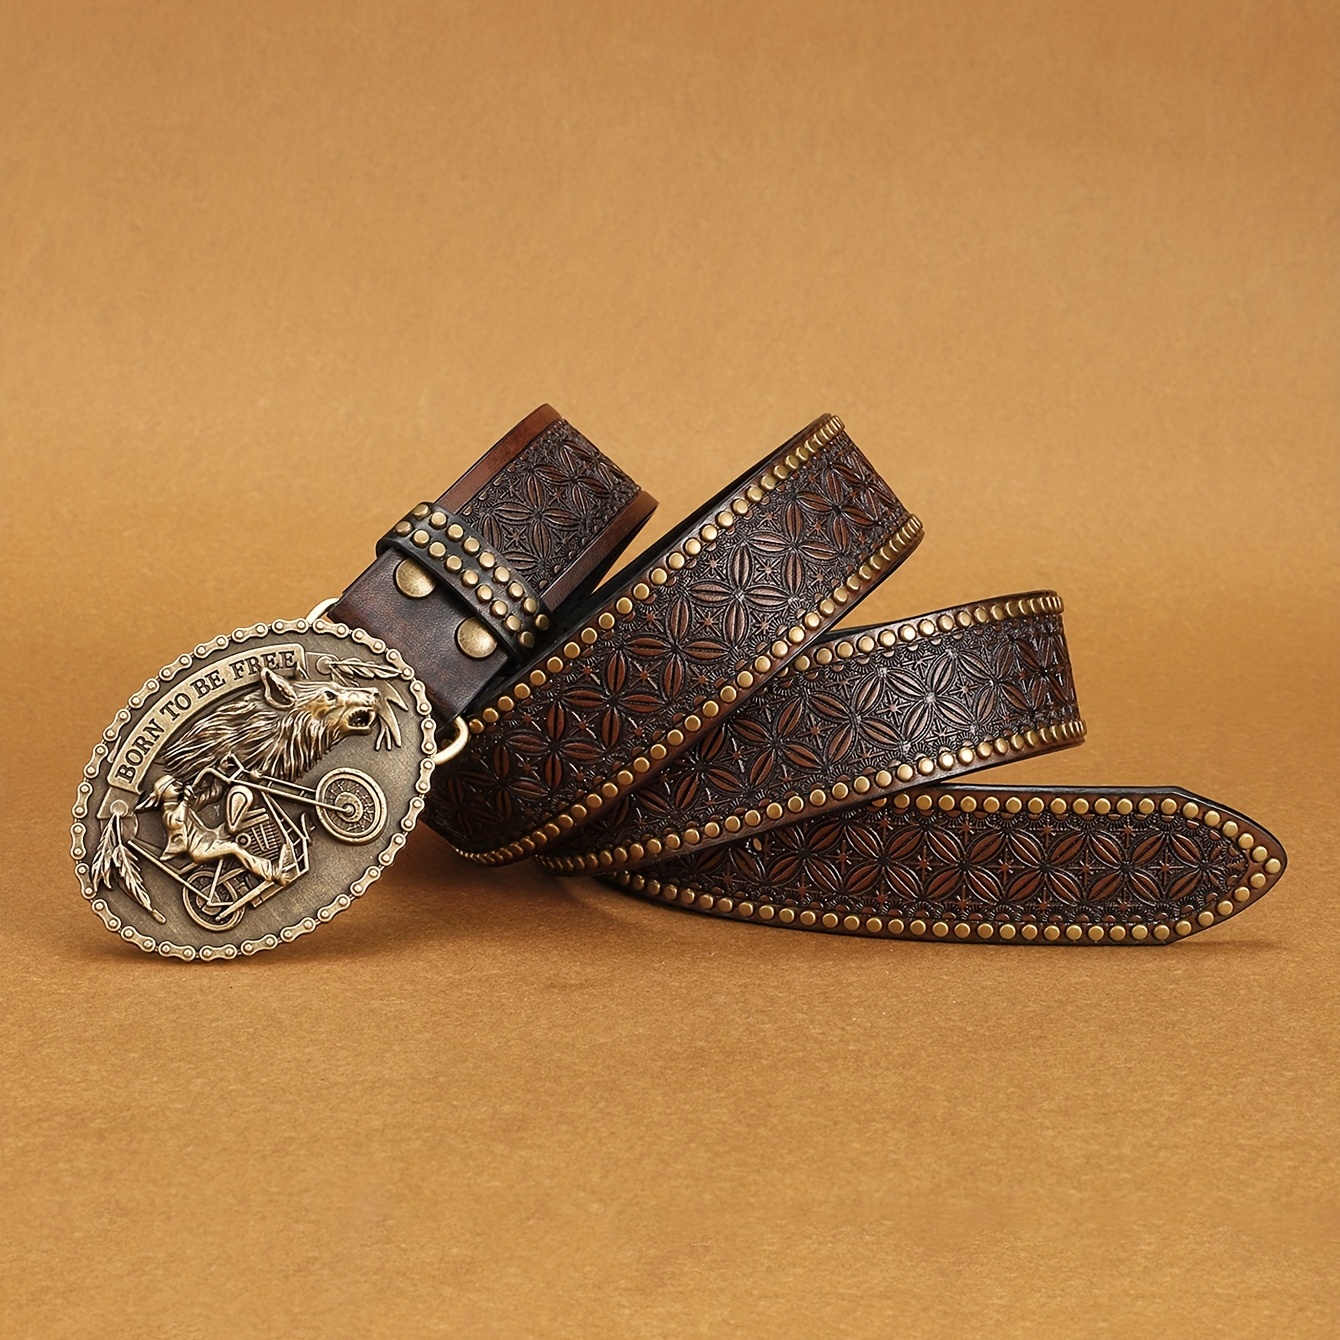 Oval buckle leather belt, Simons